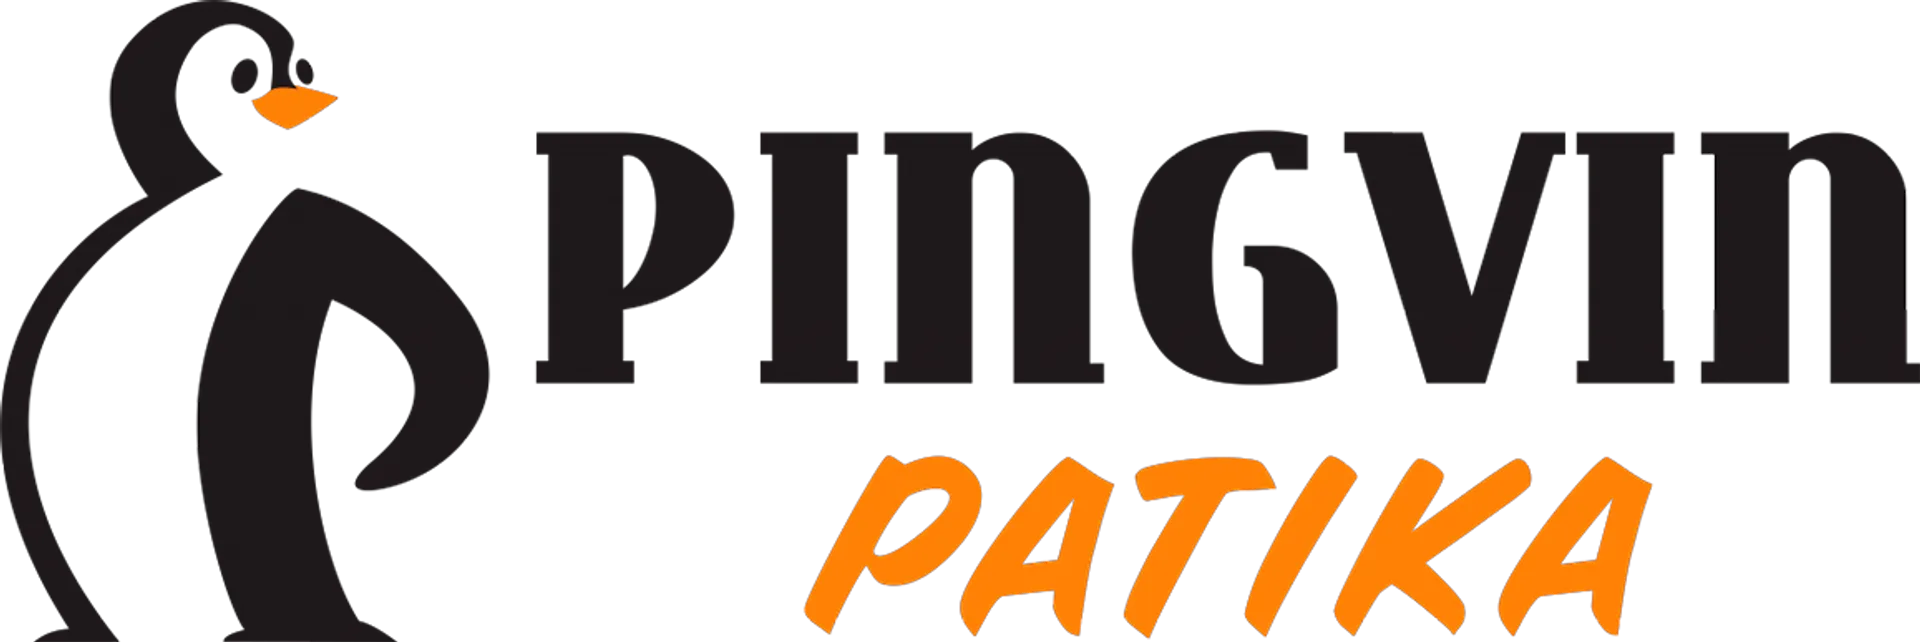 PINGVIN PATIKA logo